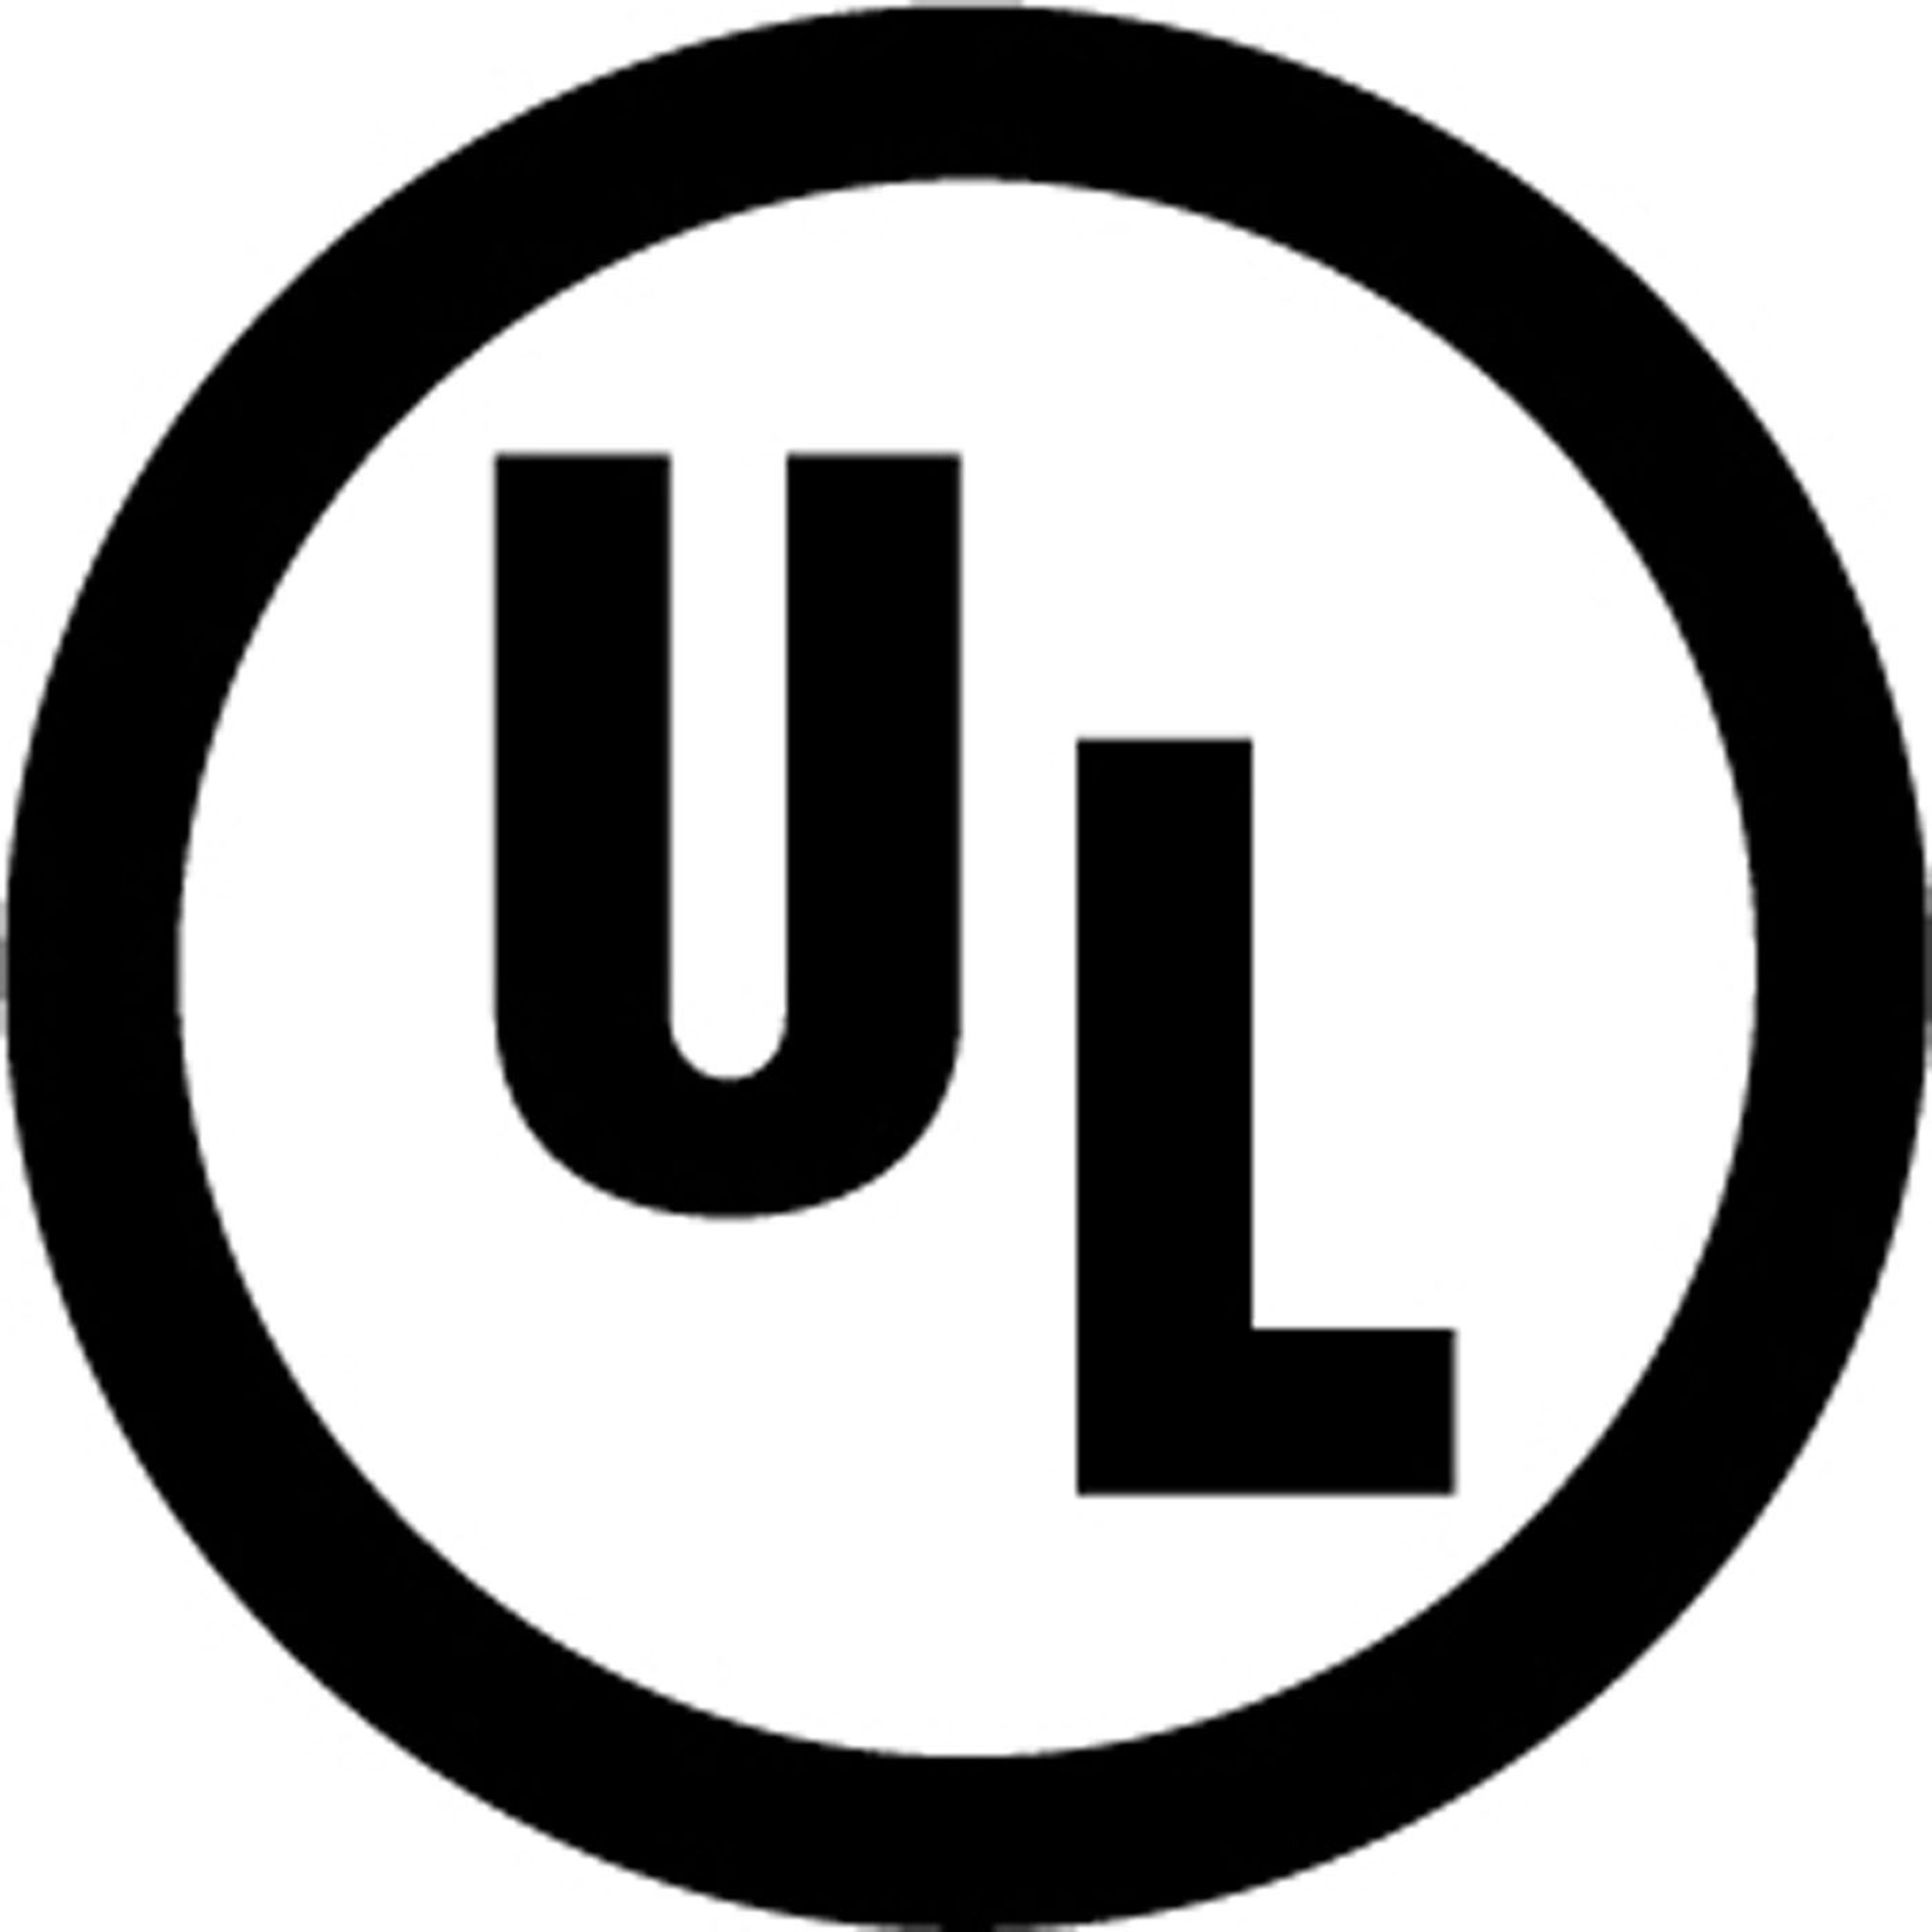 UL and the UL logo are trademarks of UL LLC. (C) 2015. (PRNewsFoto/Underwriters Laboratories) (PRNewsFoto/)